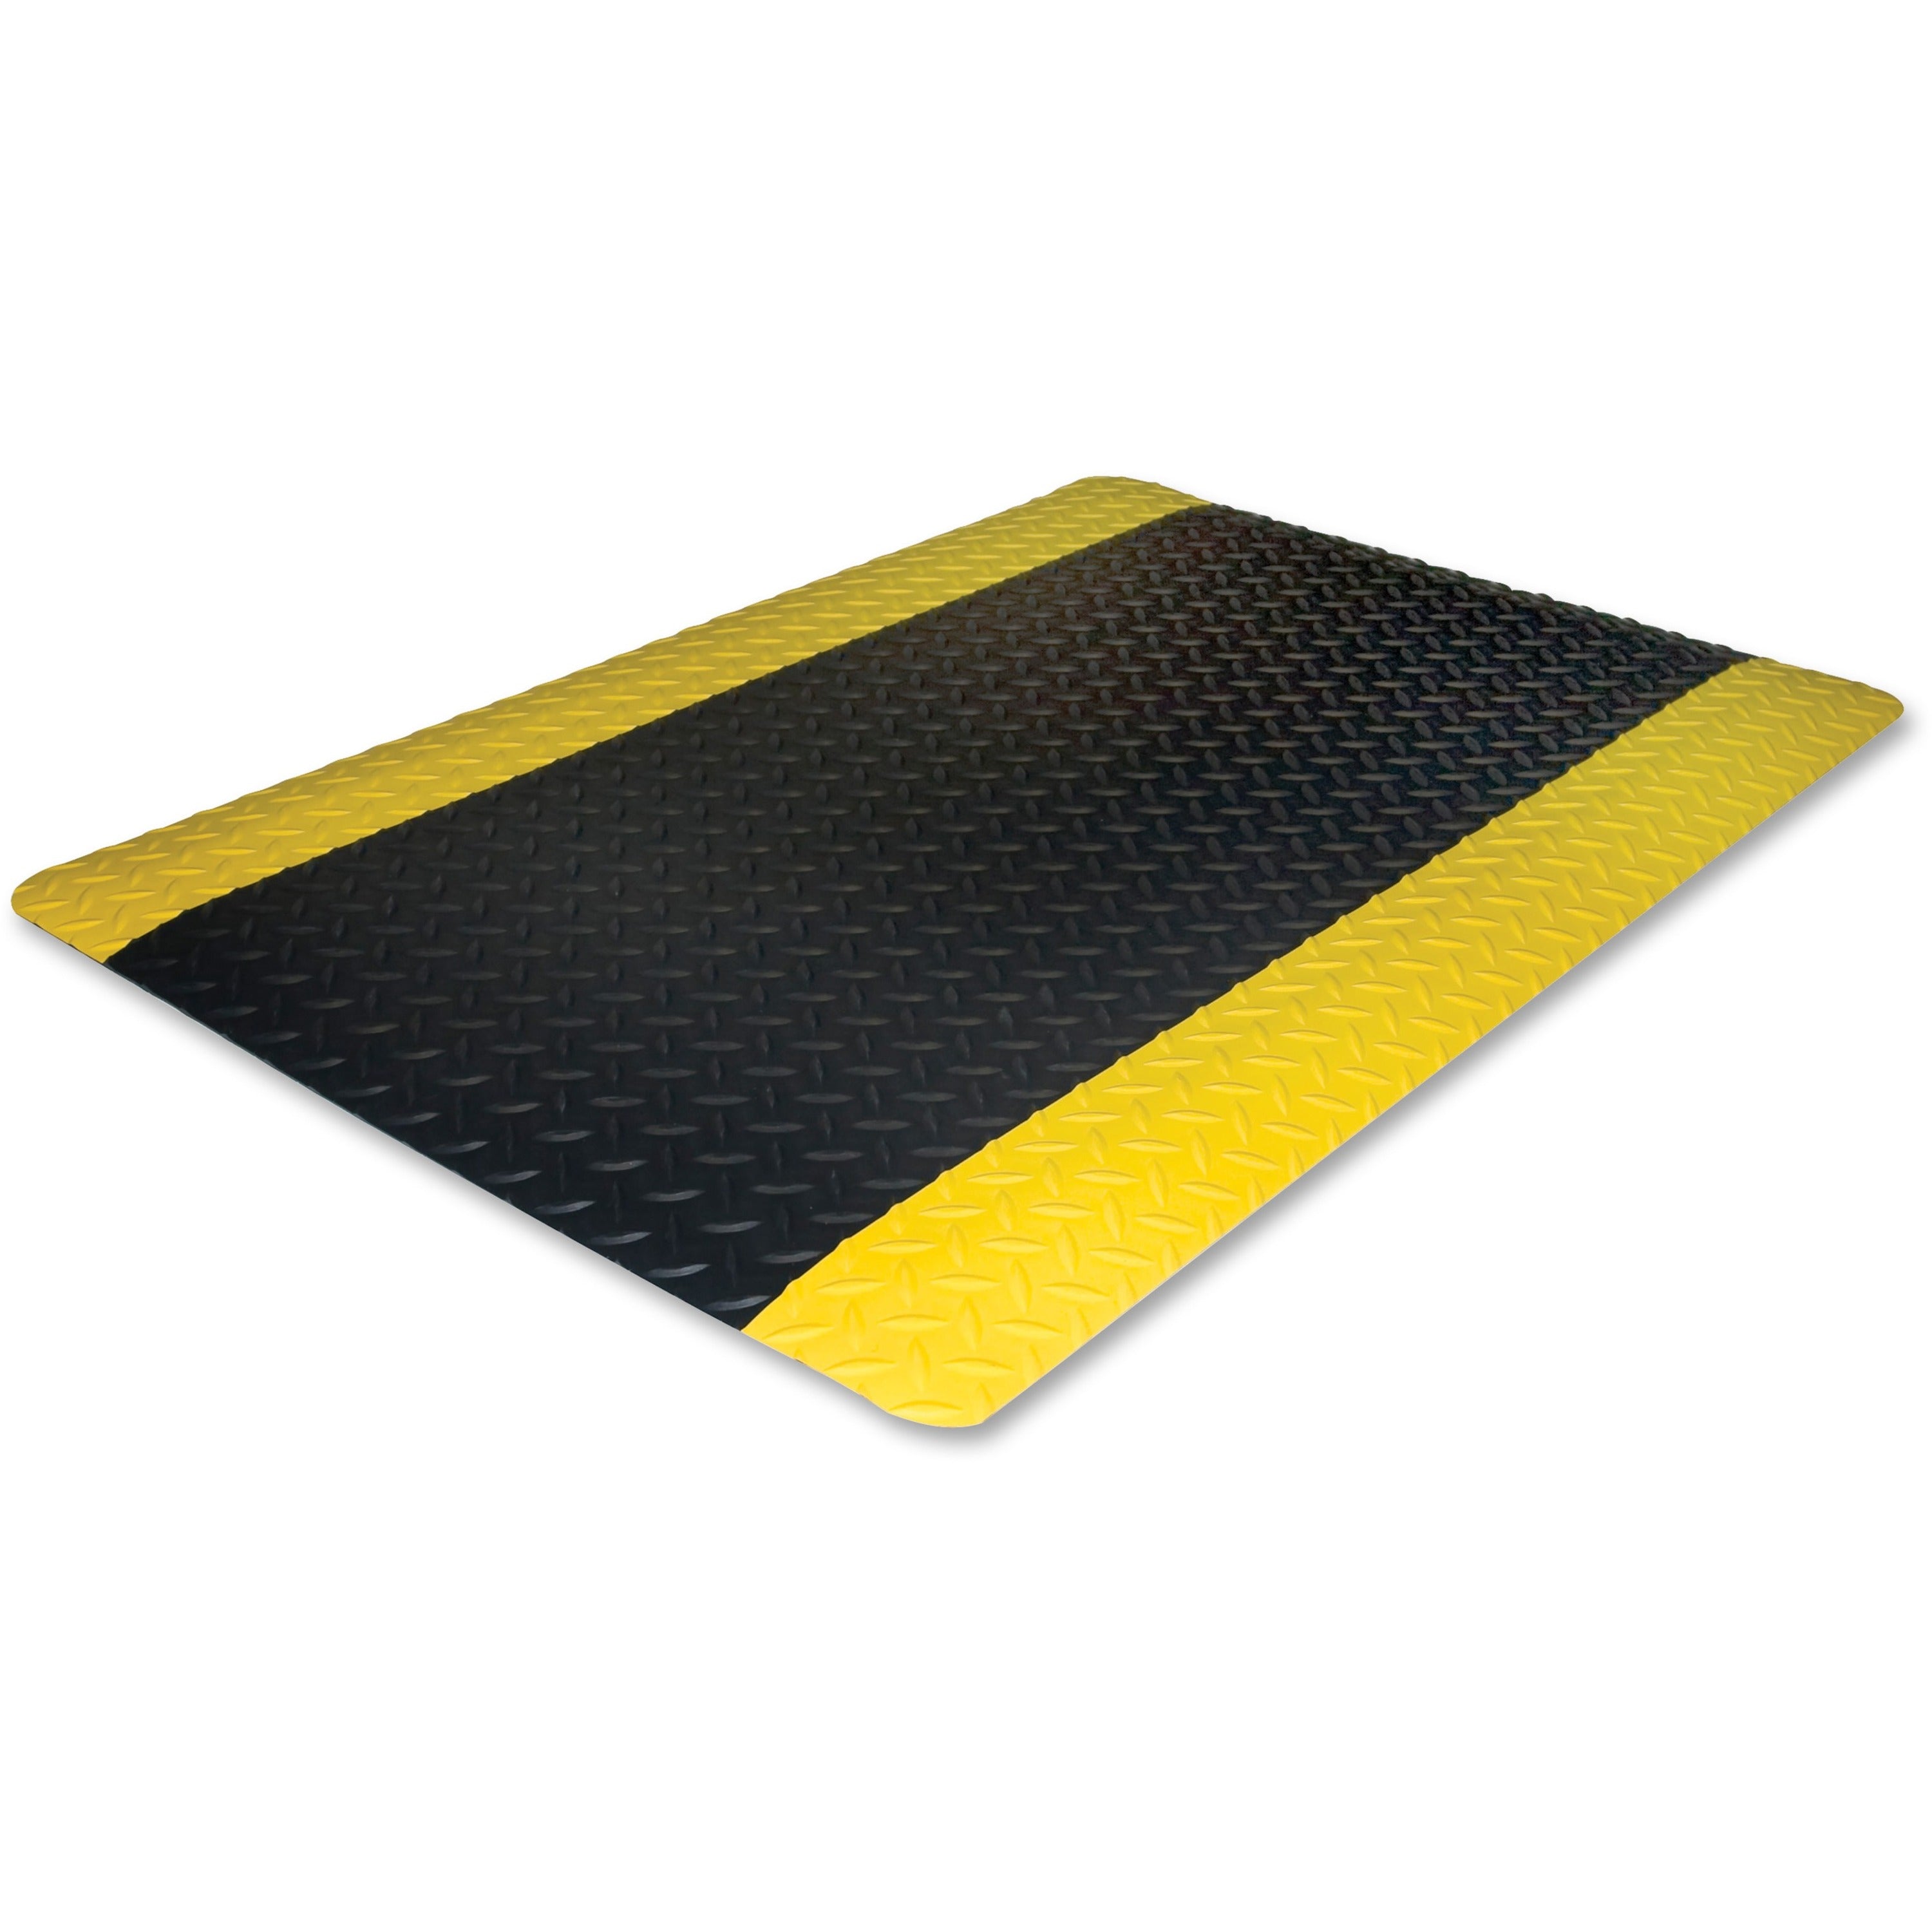 Genuine Joe Safe Step Anti-Fatigue Floor Mats - Warehouse, Factory - 36" Length x 24" Width - Black, Yellow - 1Each - 